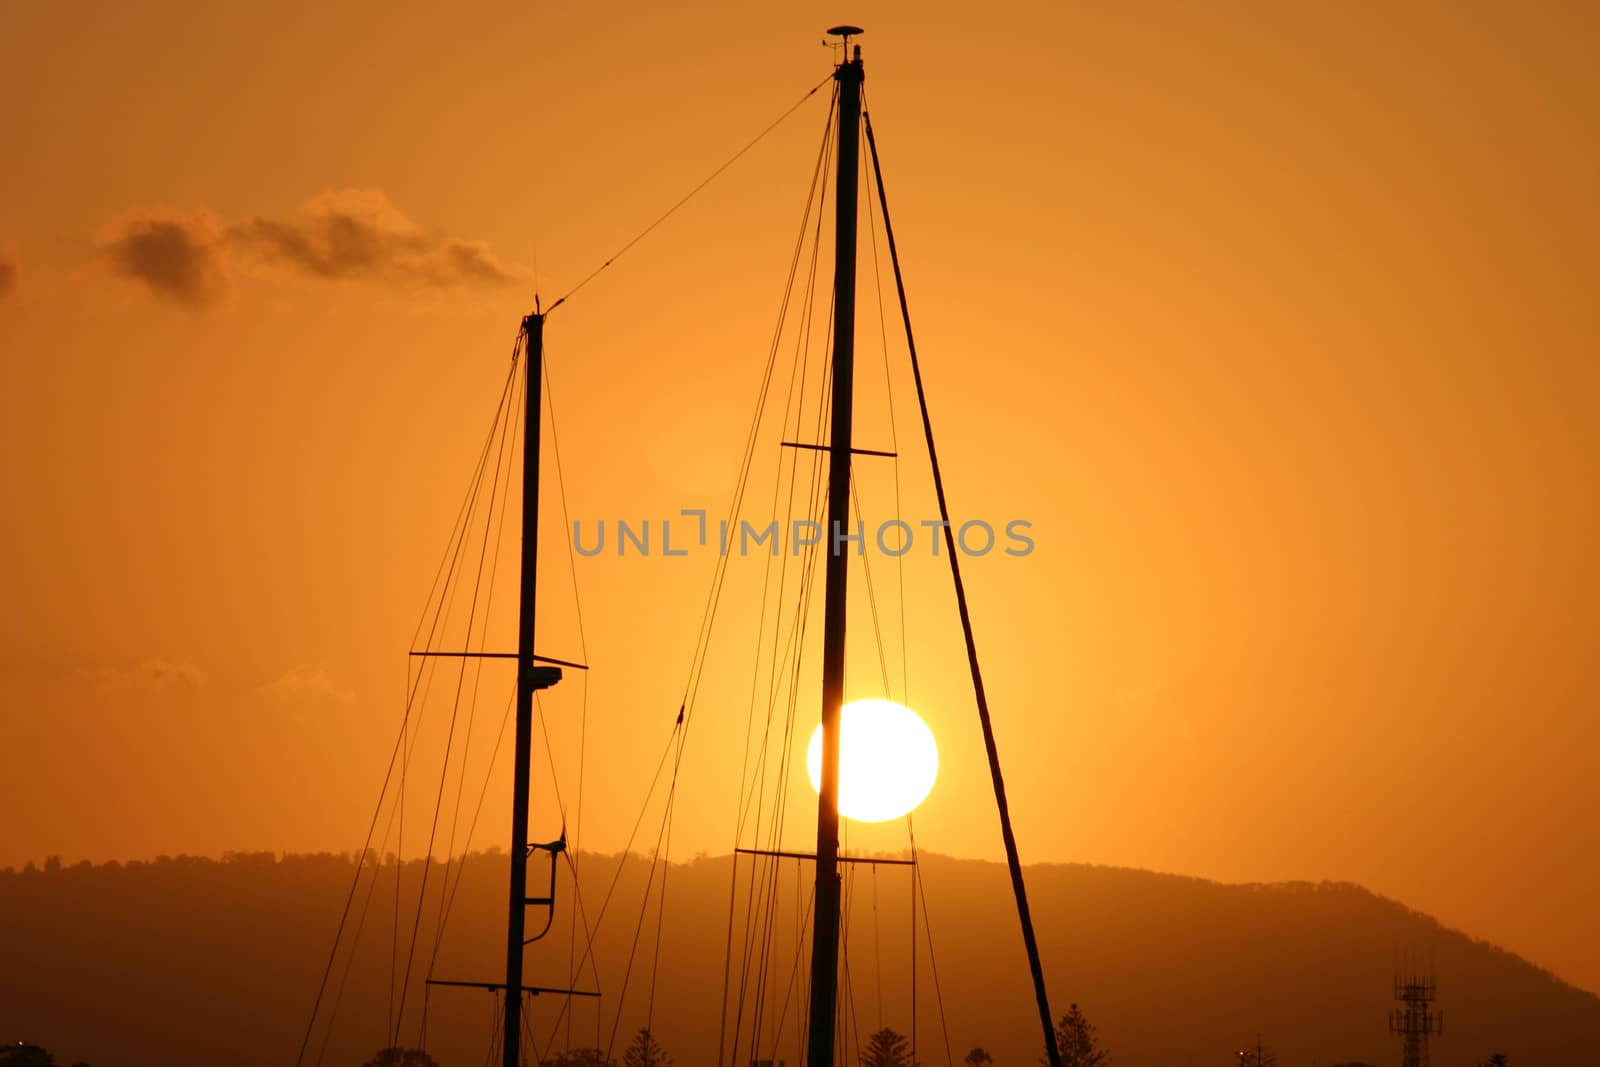 Masts In The Sun by jabiru